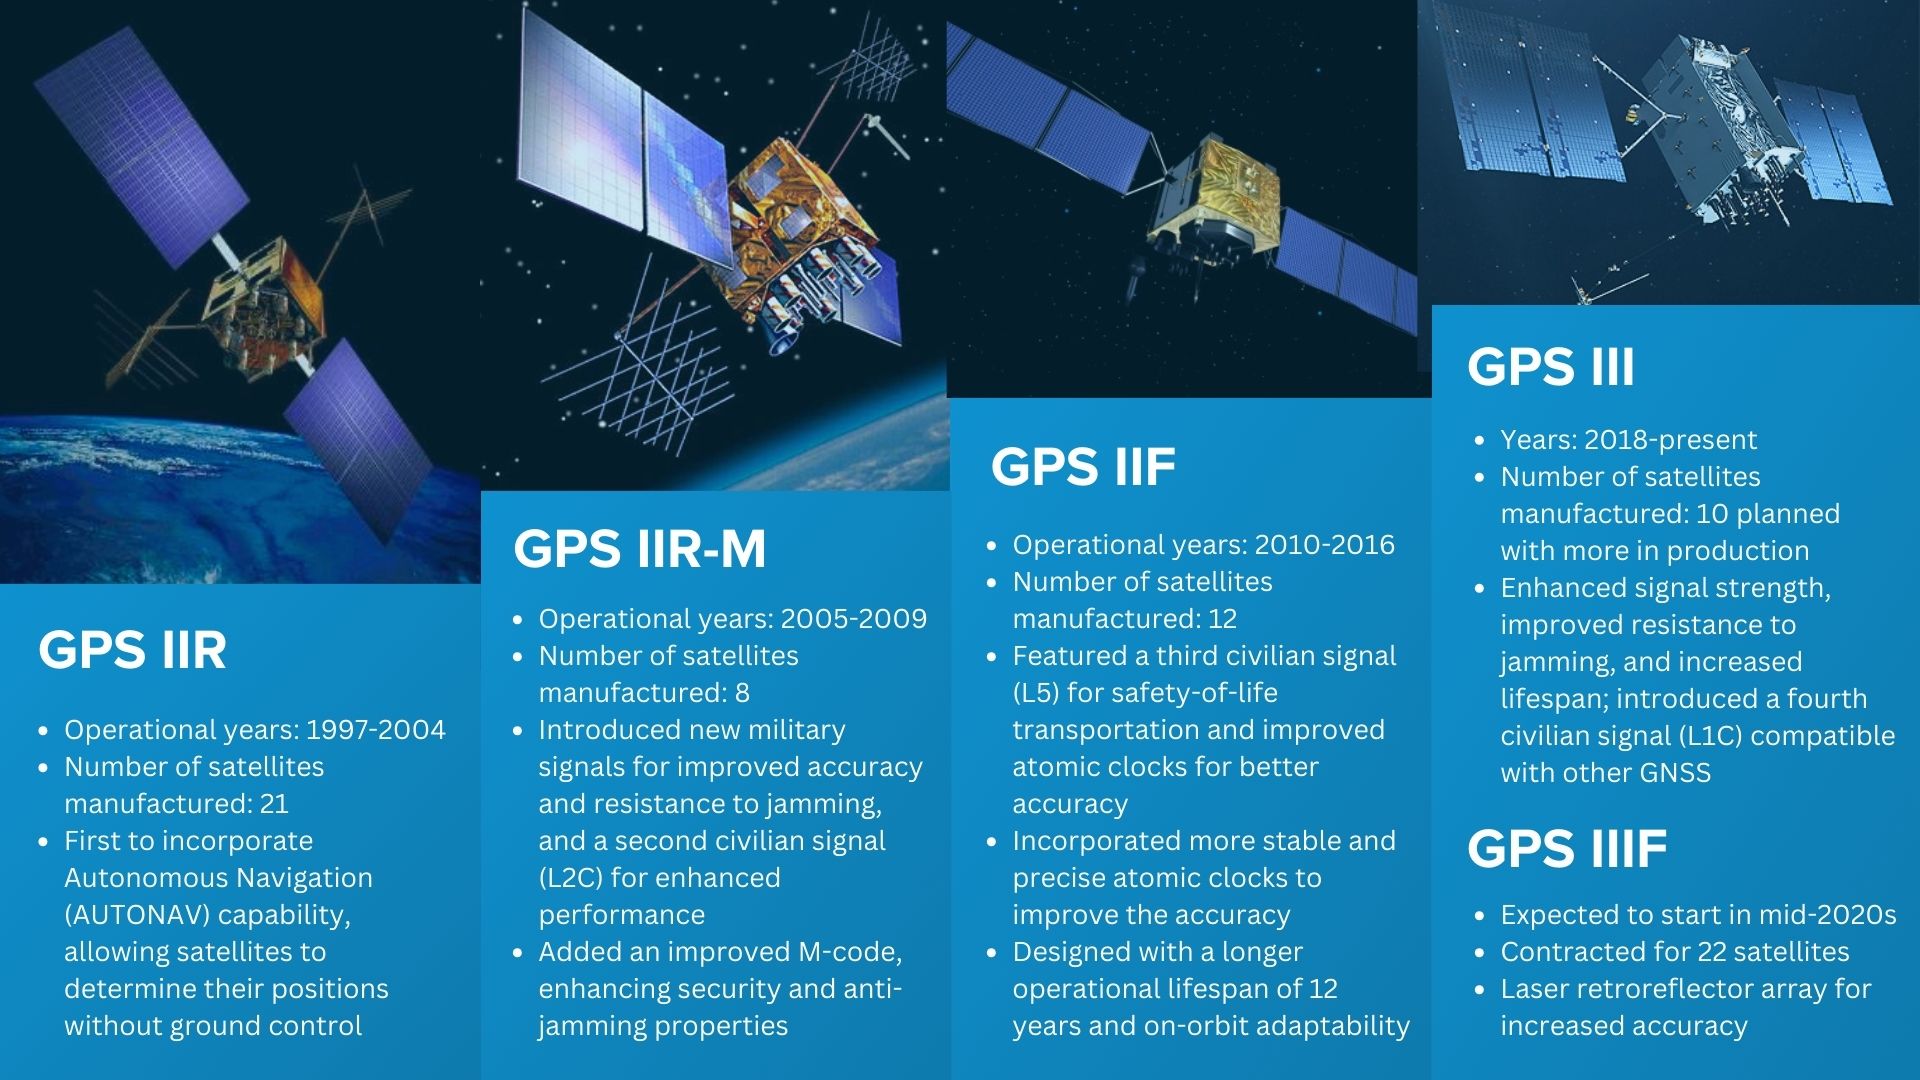 Evolution of GPS satellites